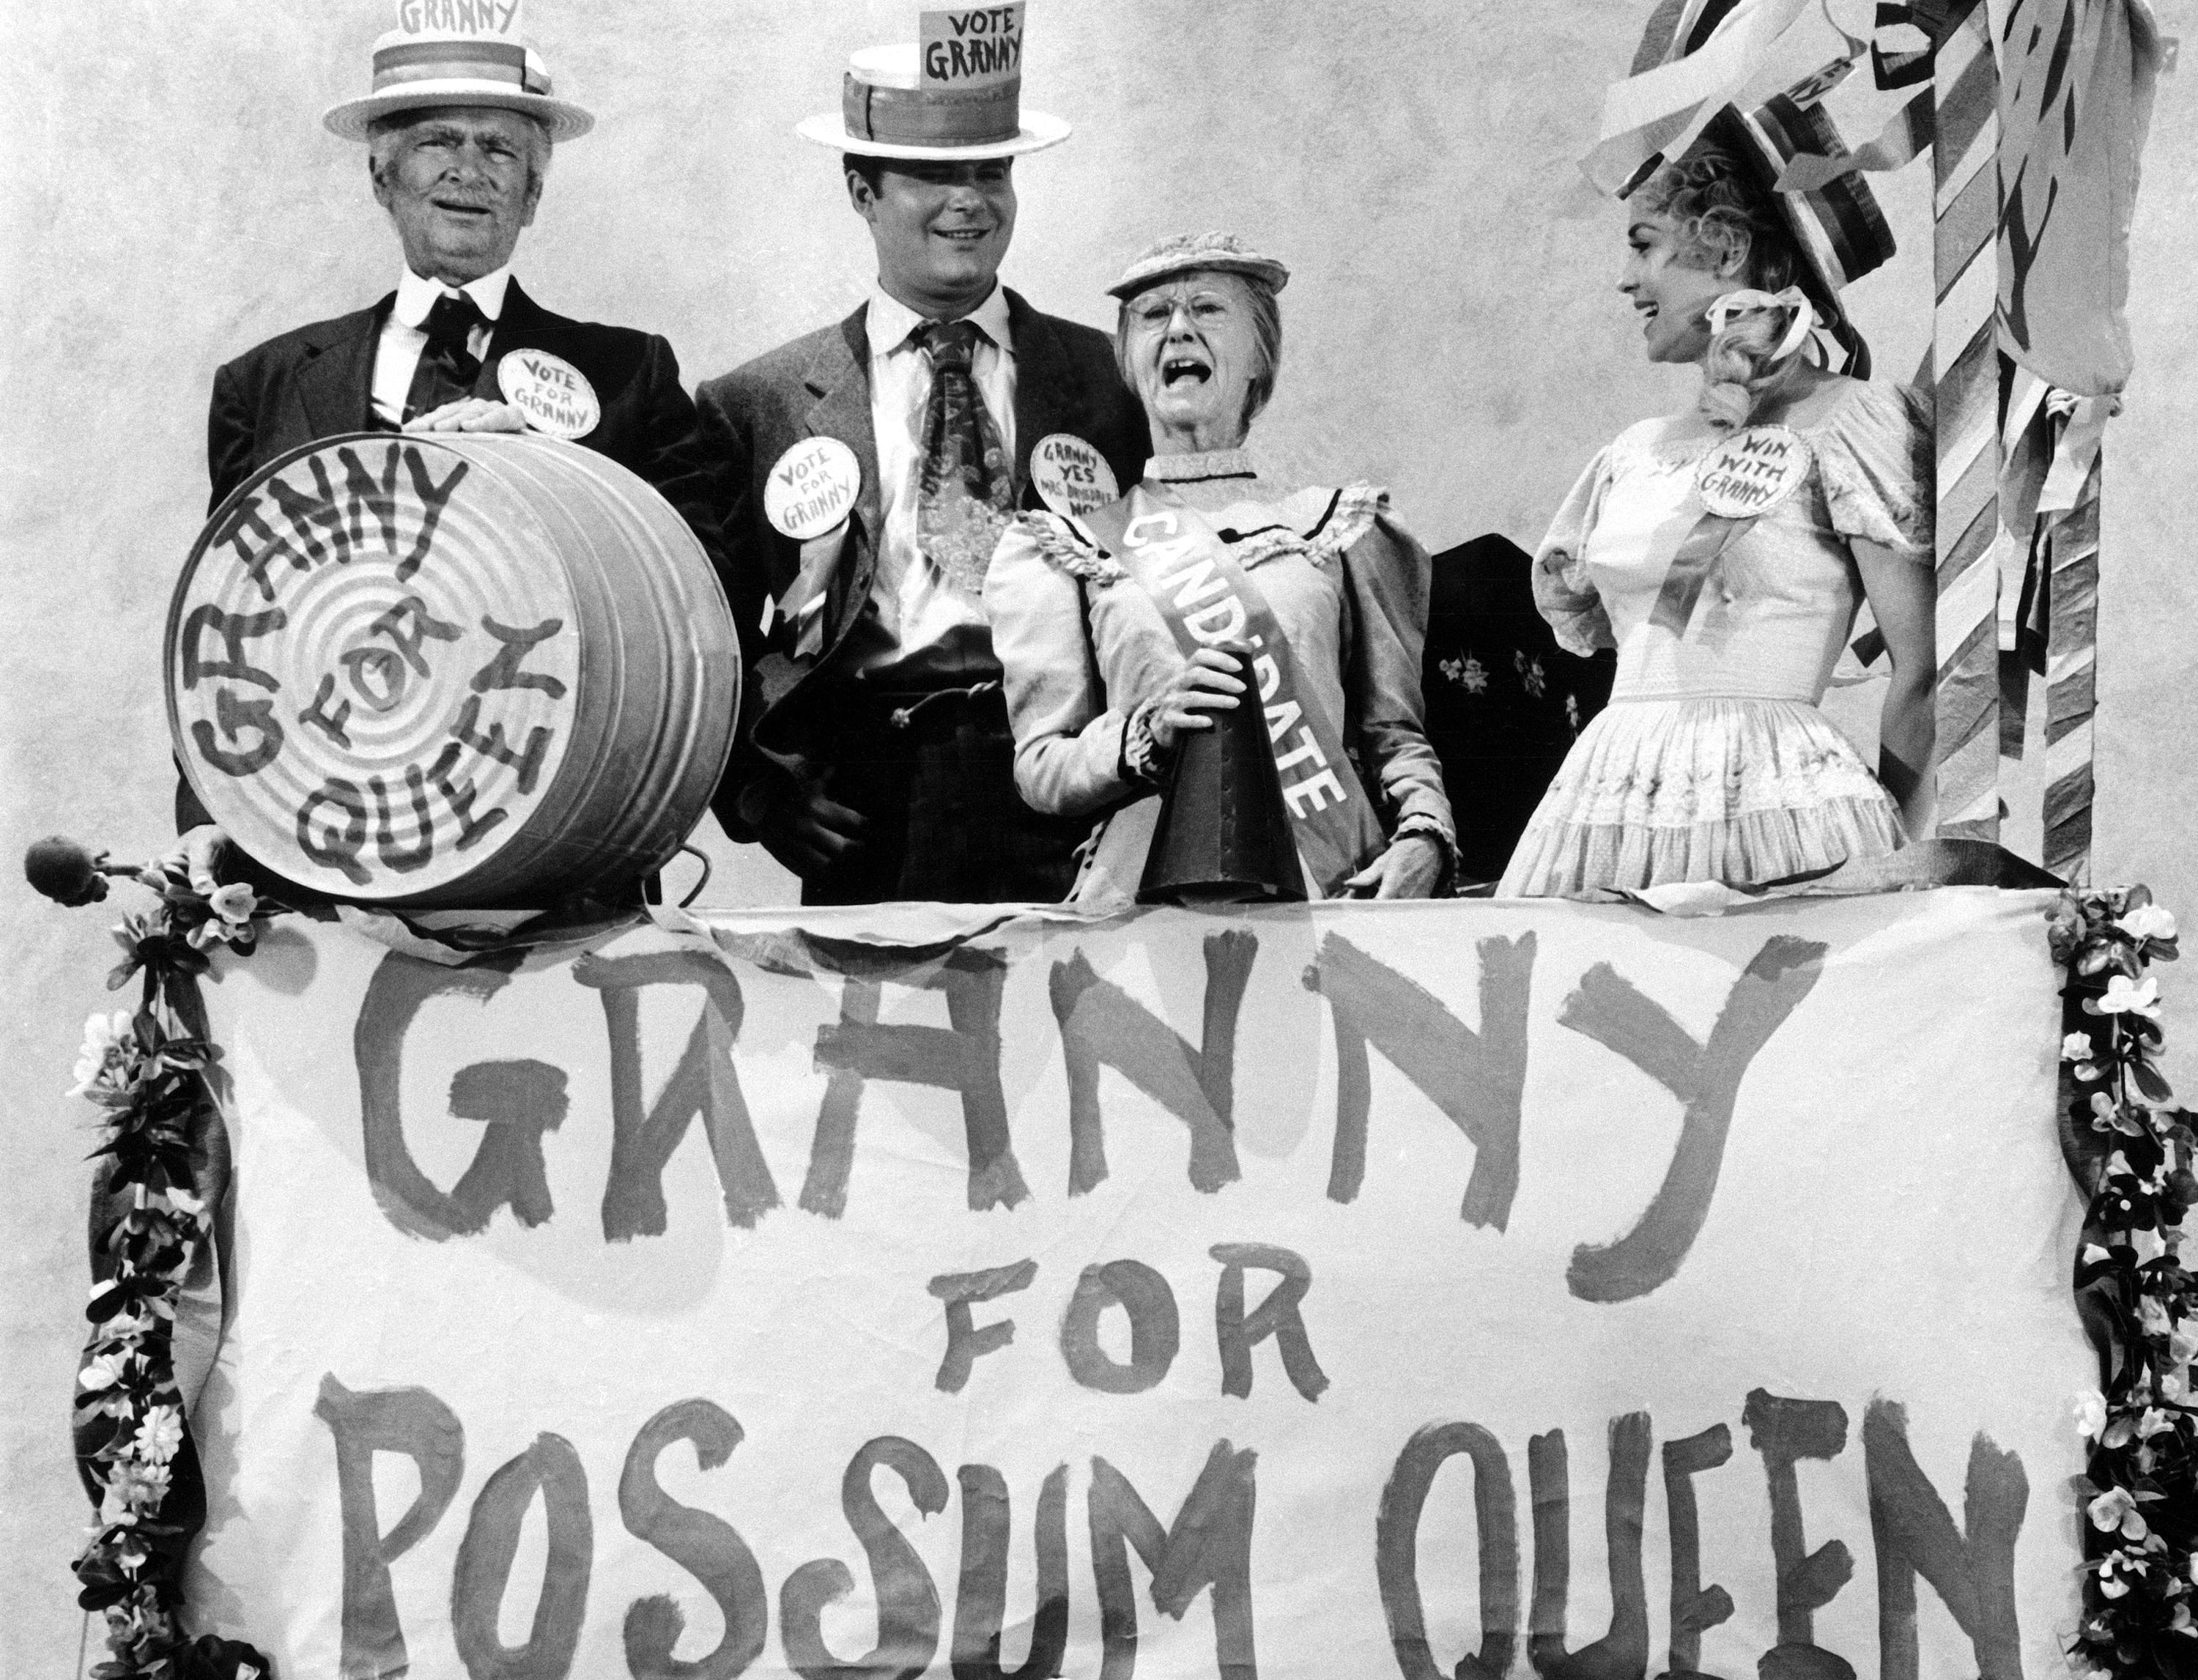 granny beverly hillbillies meme - And Vots Gram Granny Possum Queen For